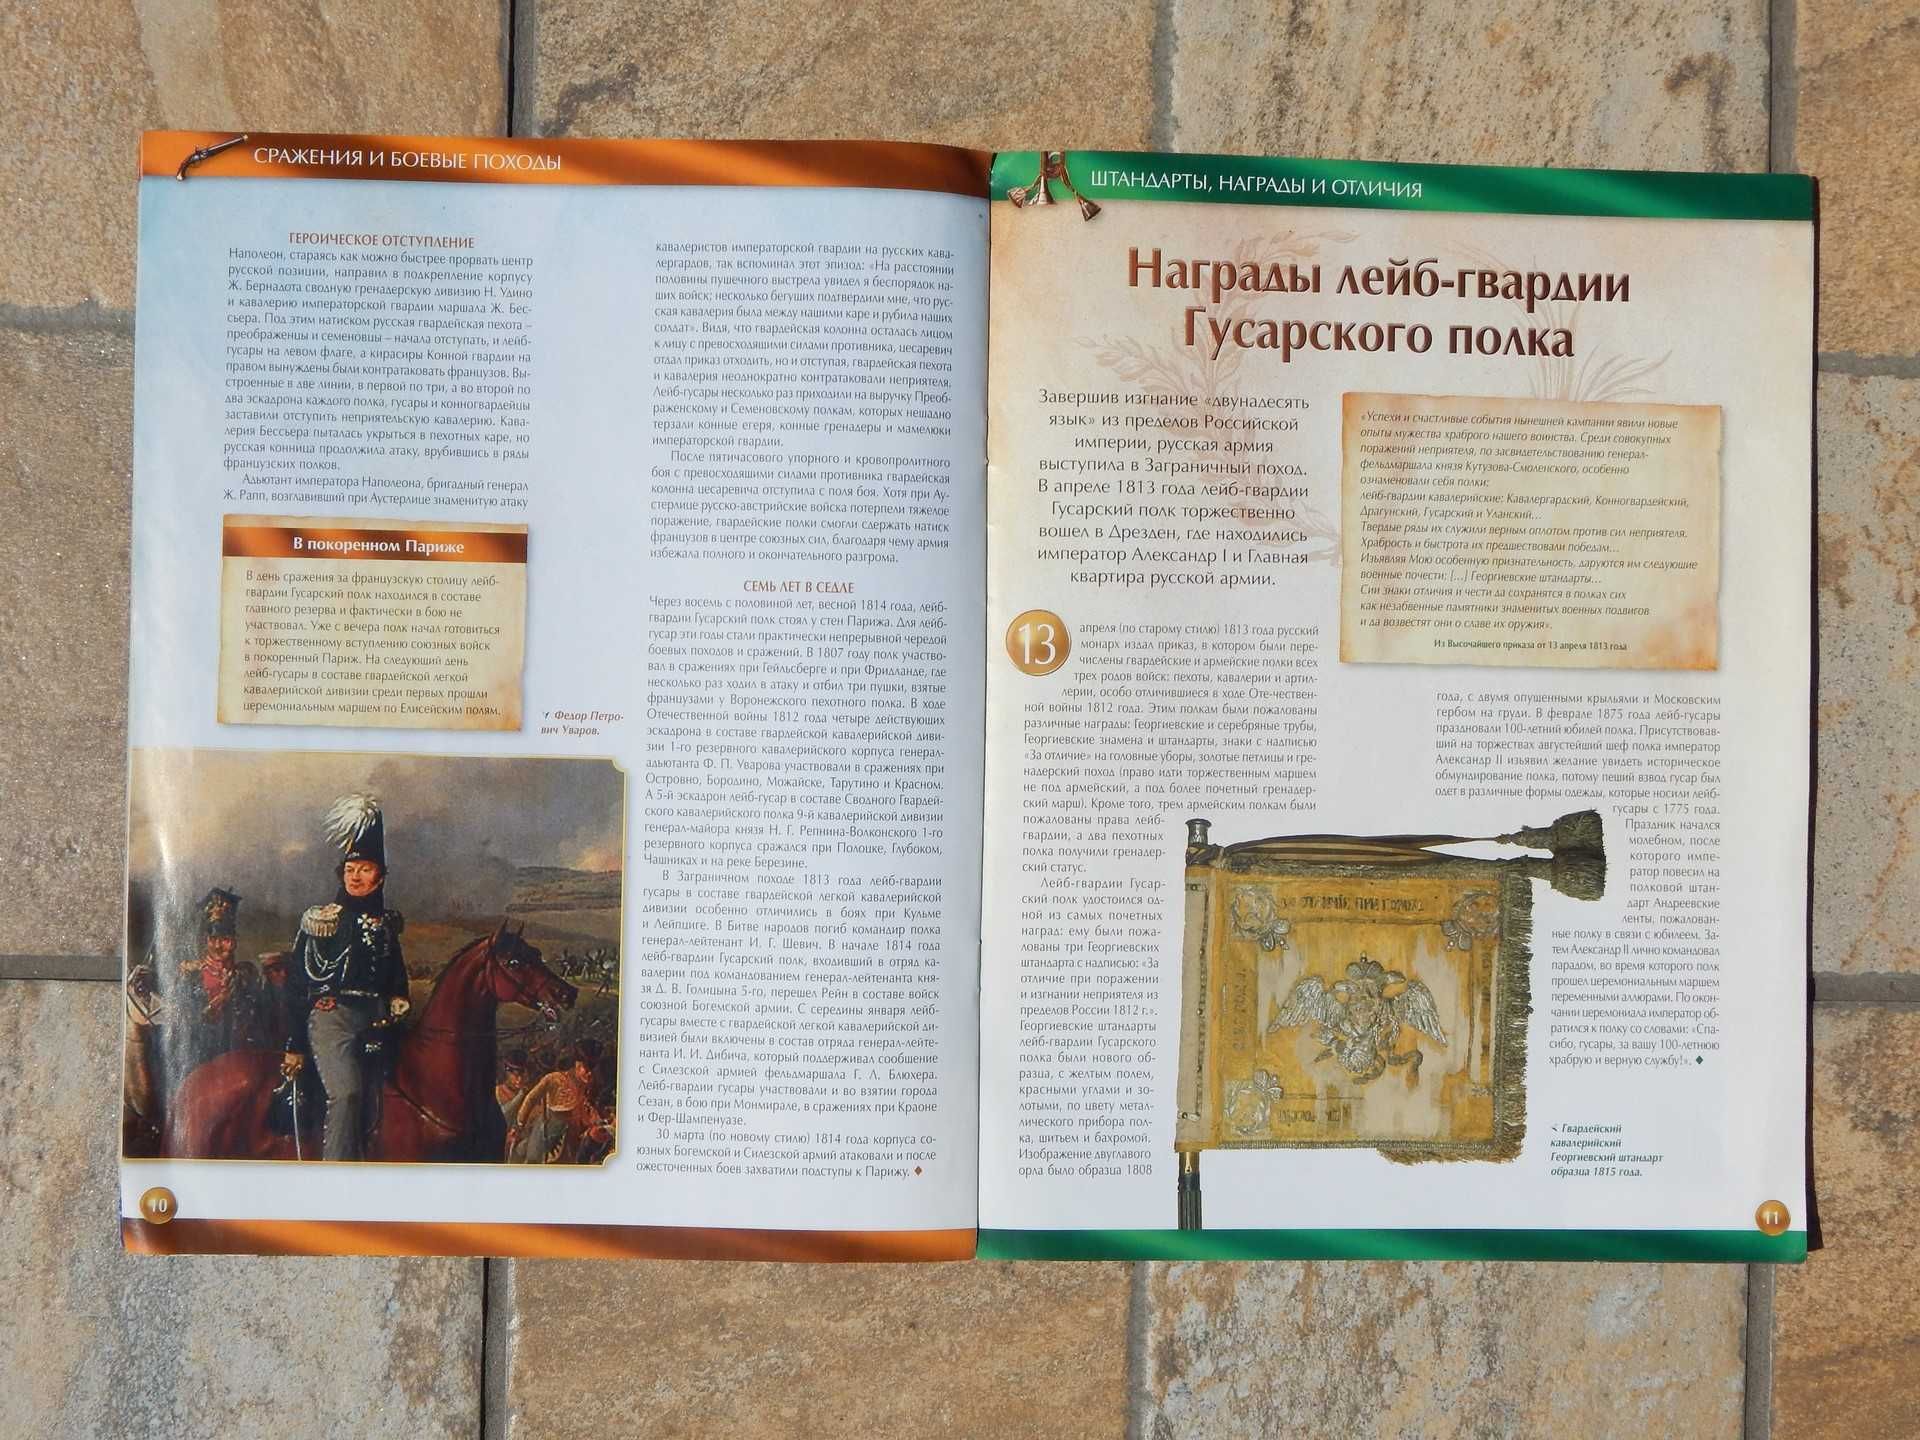 Revista rusa descriere cavalerie husari 1812-1814 Eaglemoss